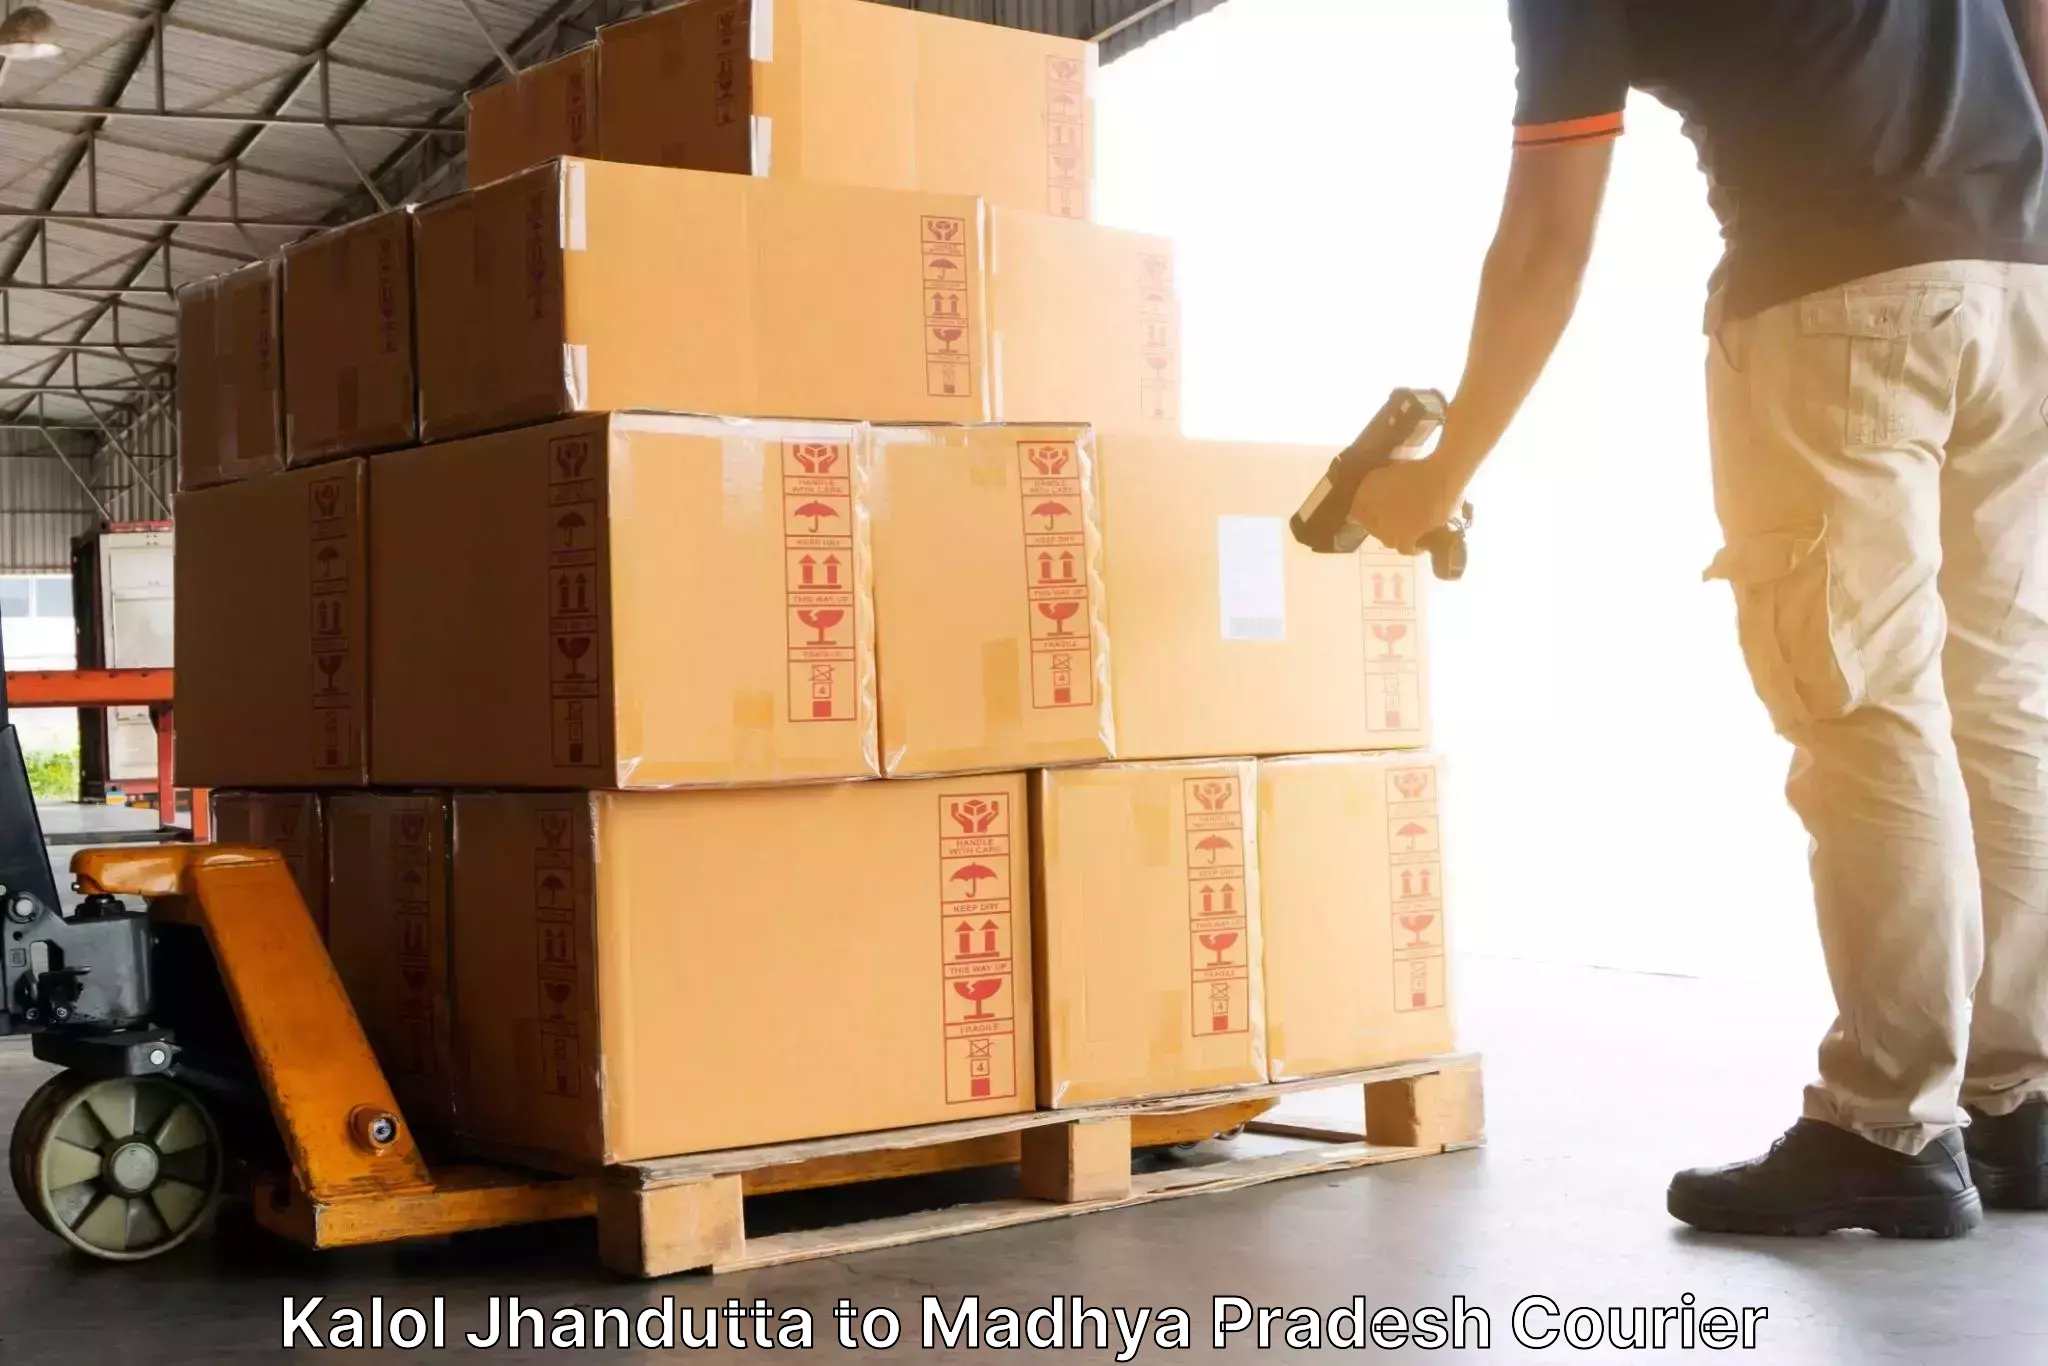 Business delivery service Kalol Jhandutta to Madhya Pradesh